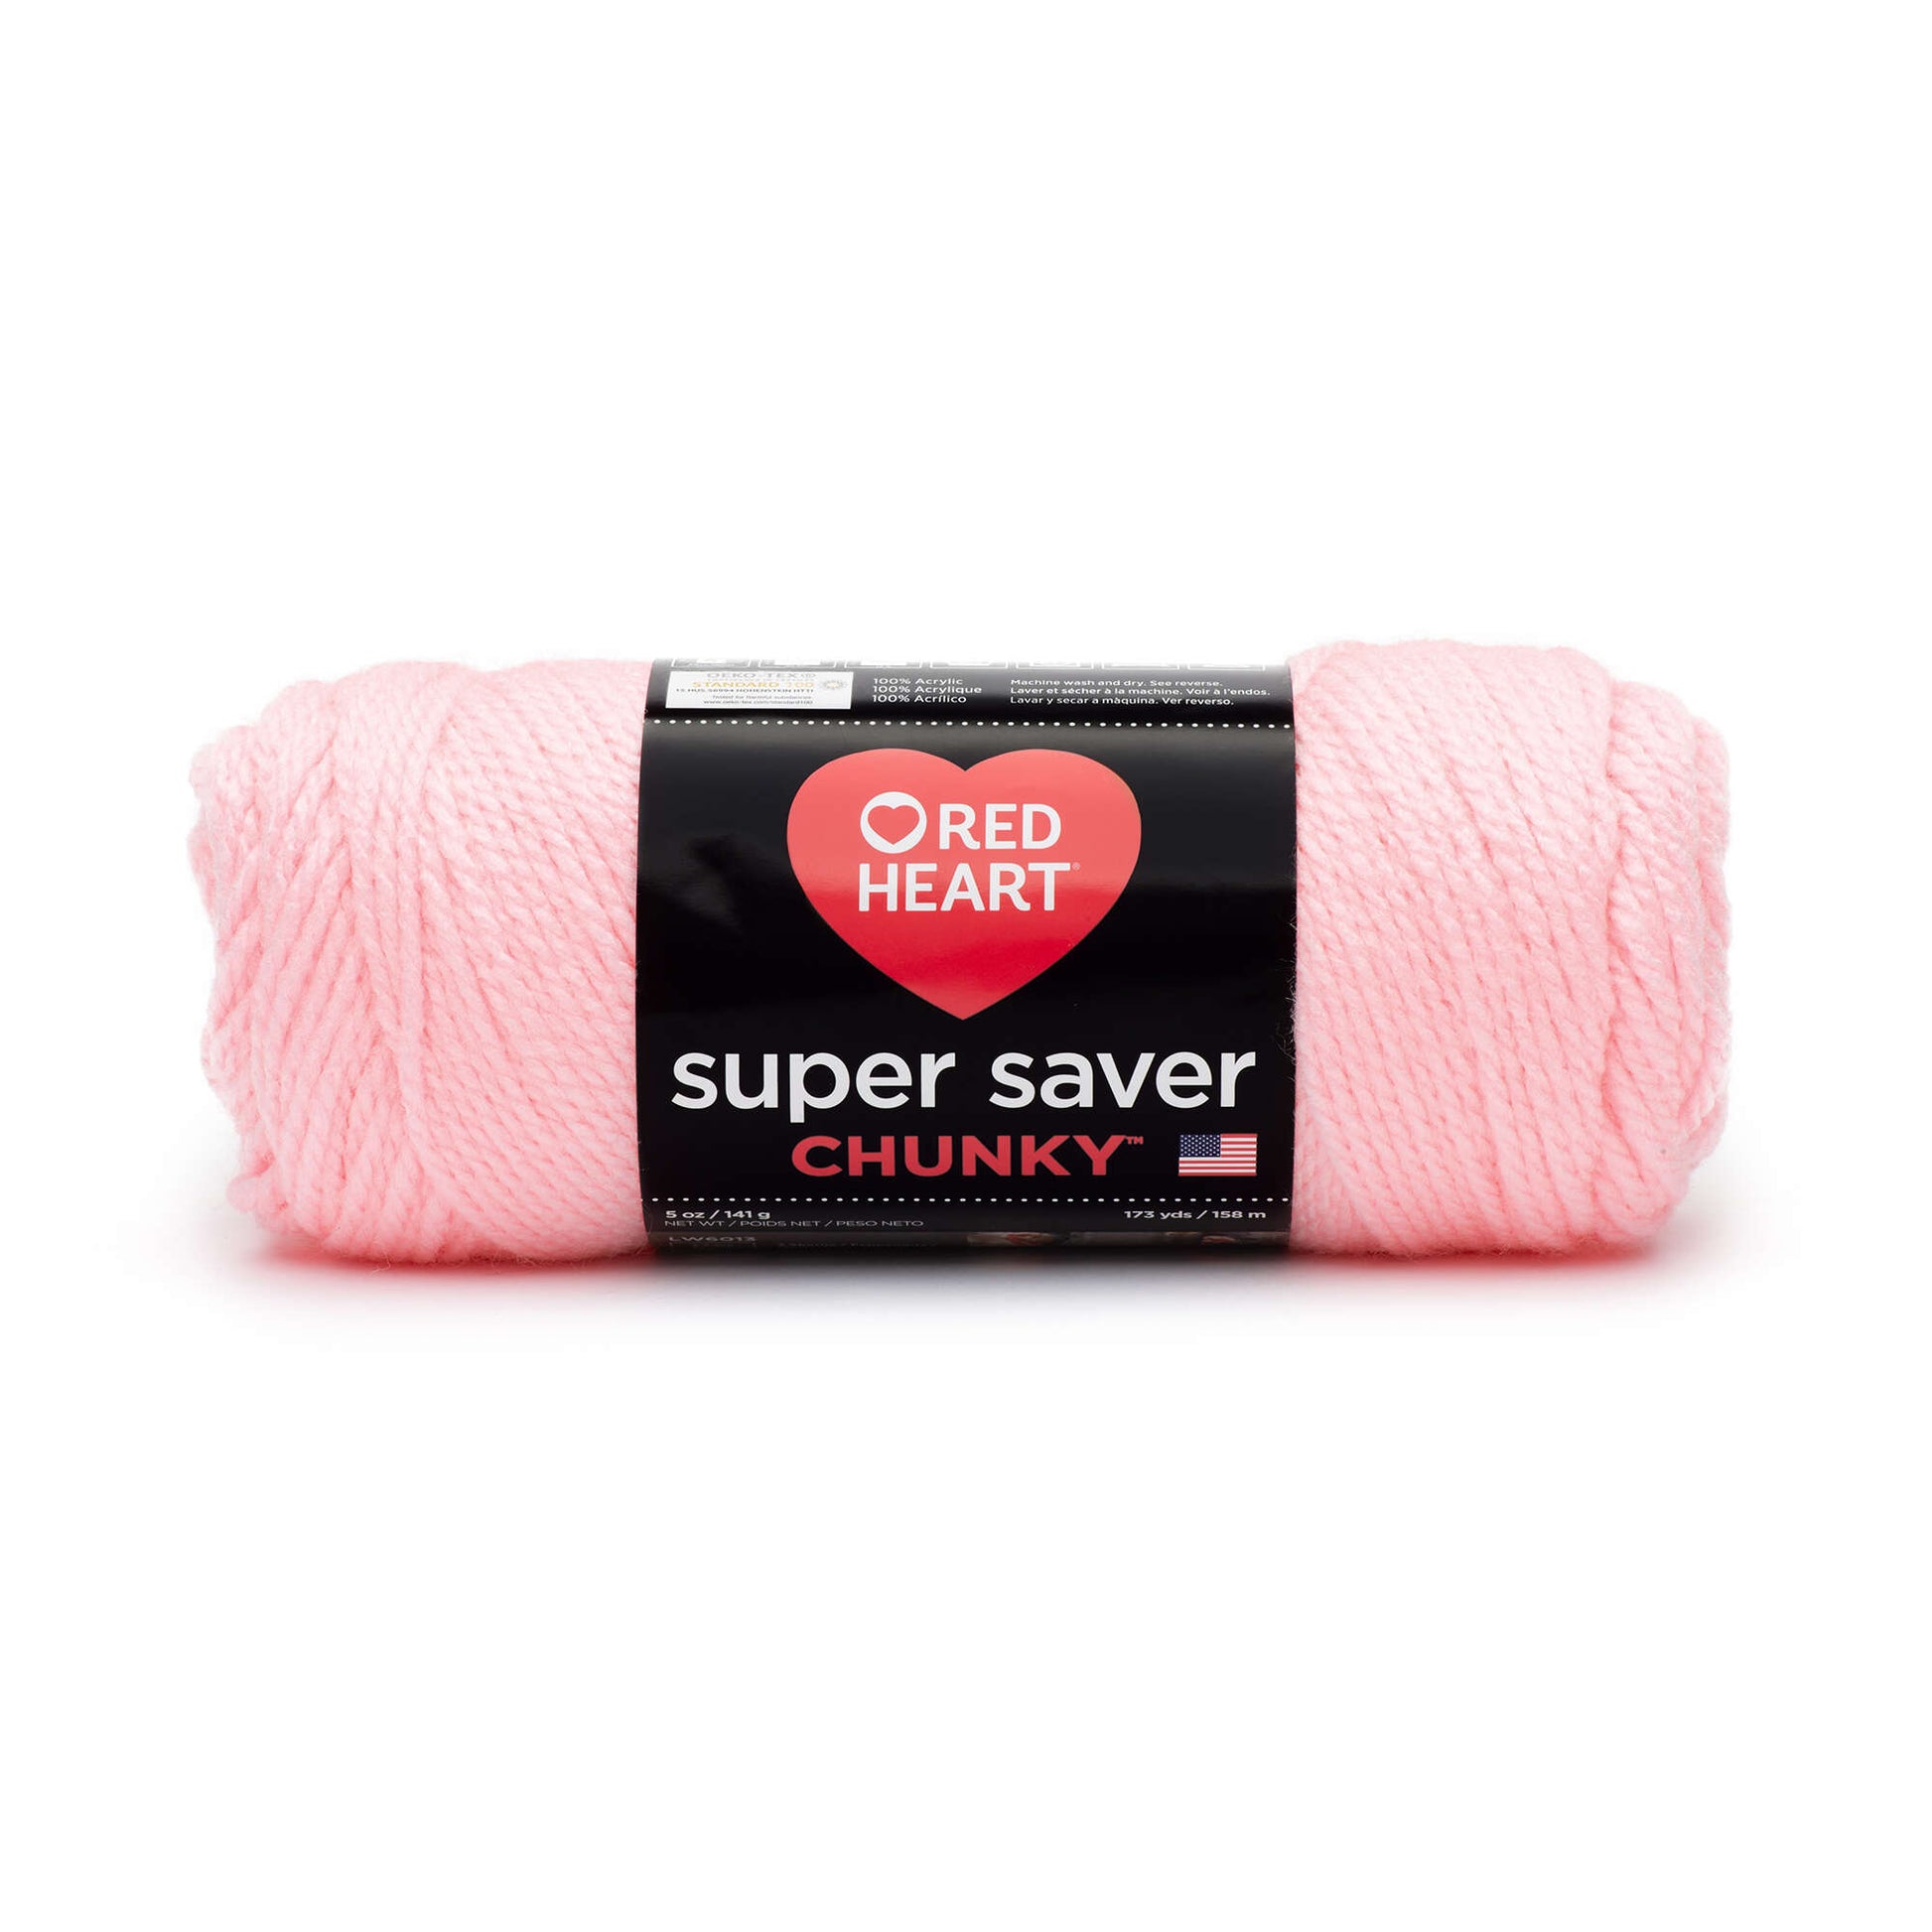 Red Heart Super Saver Chunky Yarn - Discontinued shades